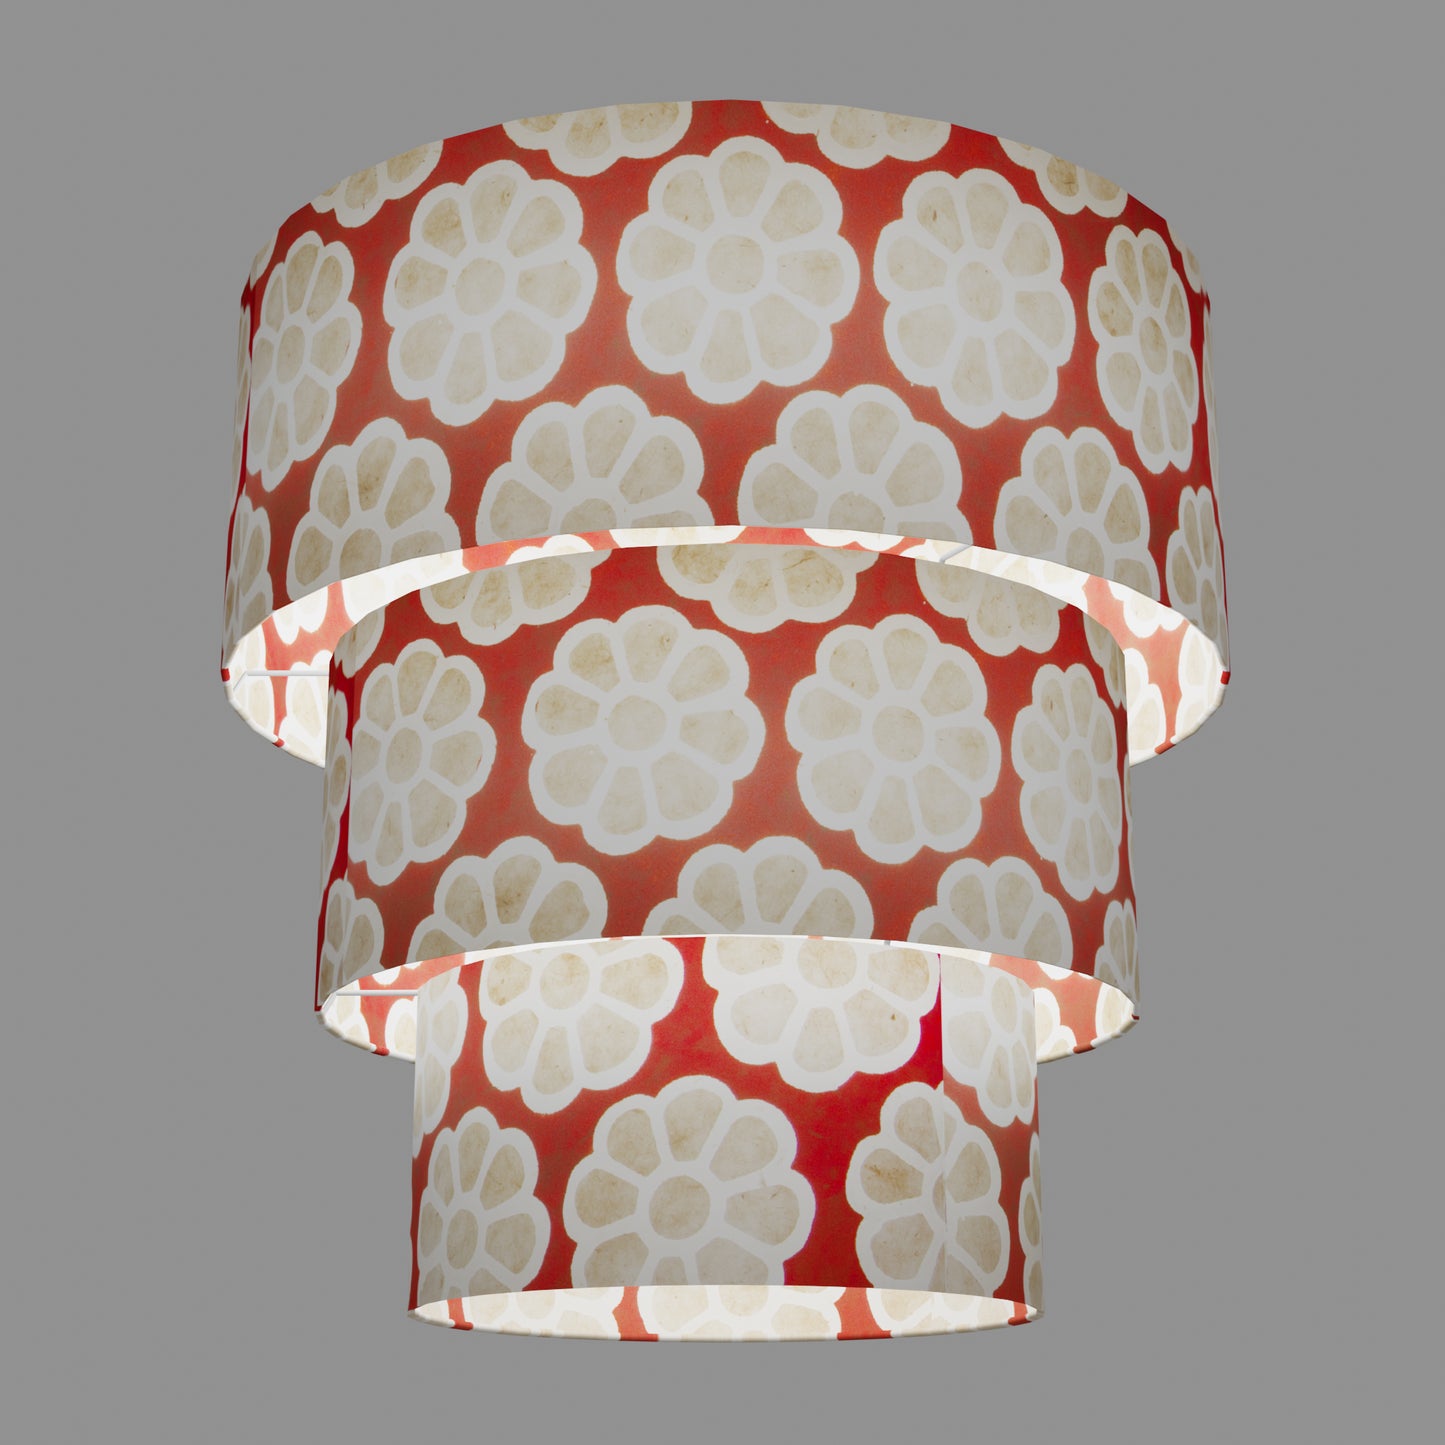 3 Tier Lamp Shade - P18 - Batik Big Flower on Red, 50cm x 20cm, 40cm x 17.5cm & 30cm x 15cm